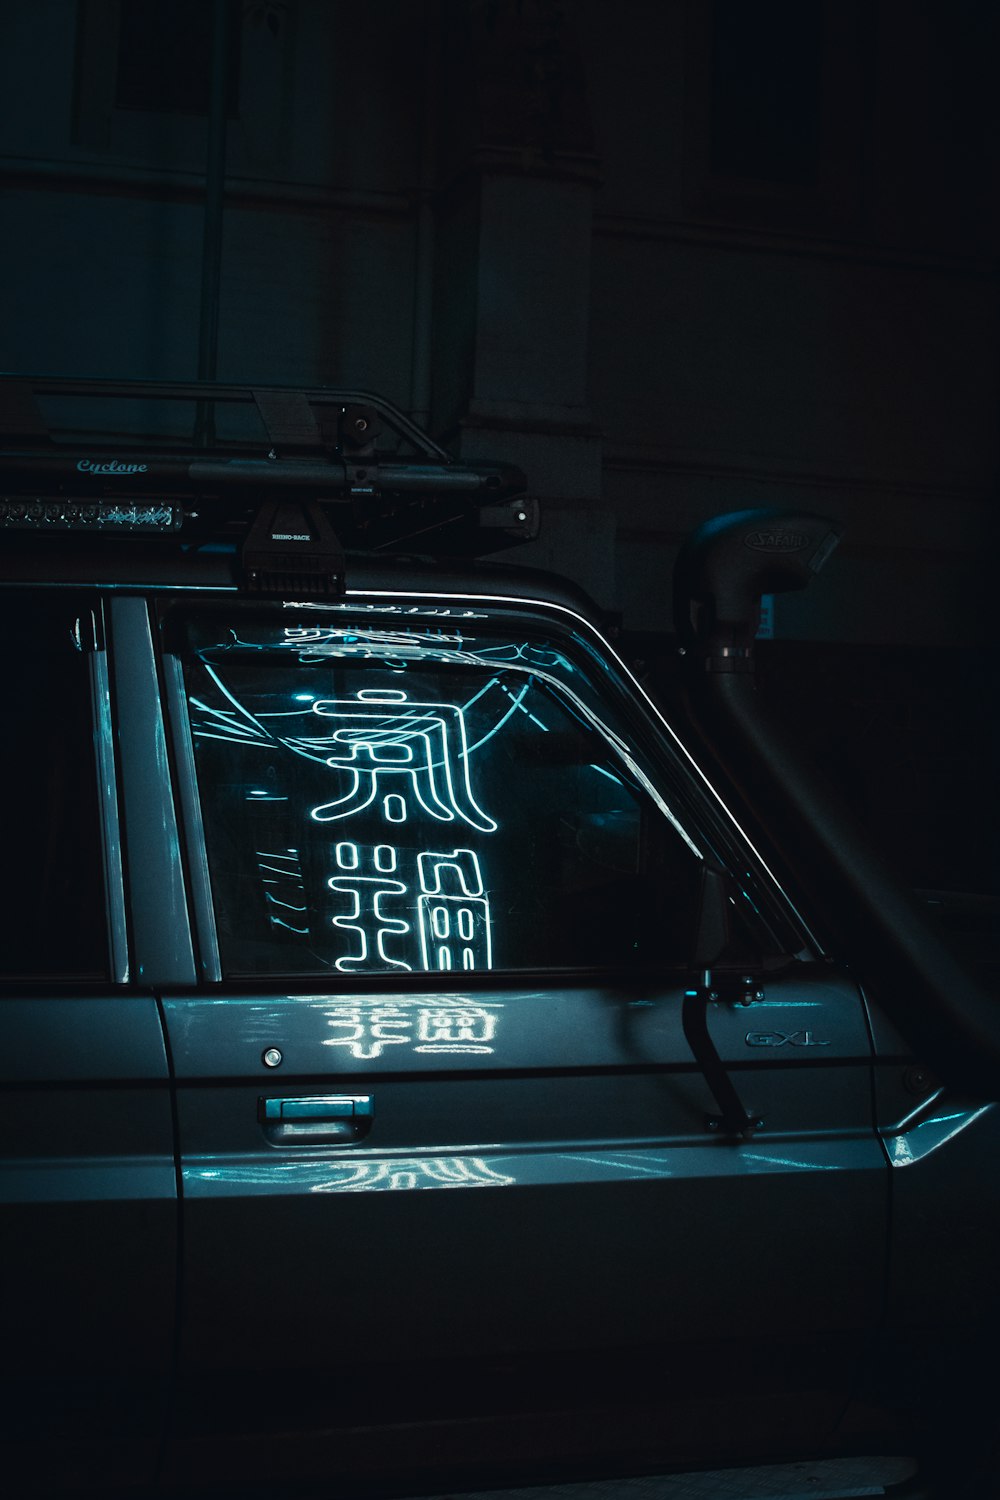 parked car with kanji signage reflecting on it